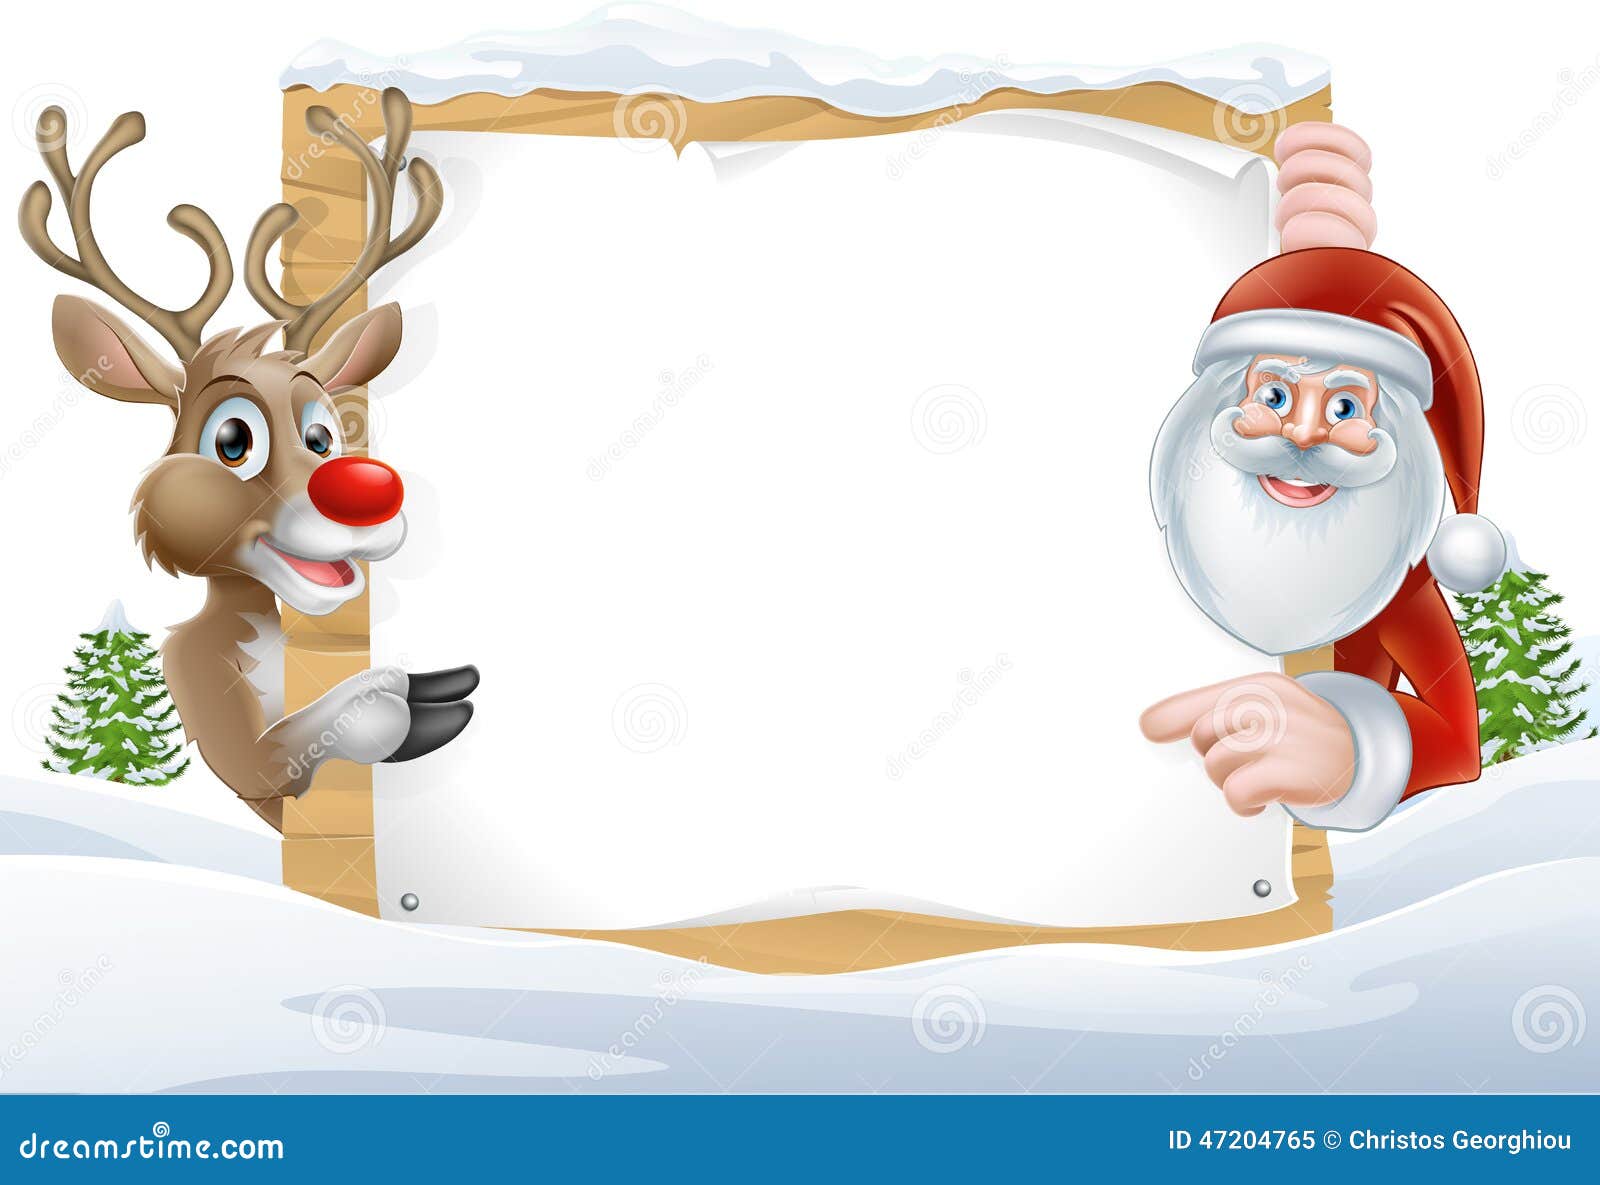 santa and reindeer sign